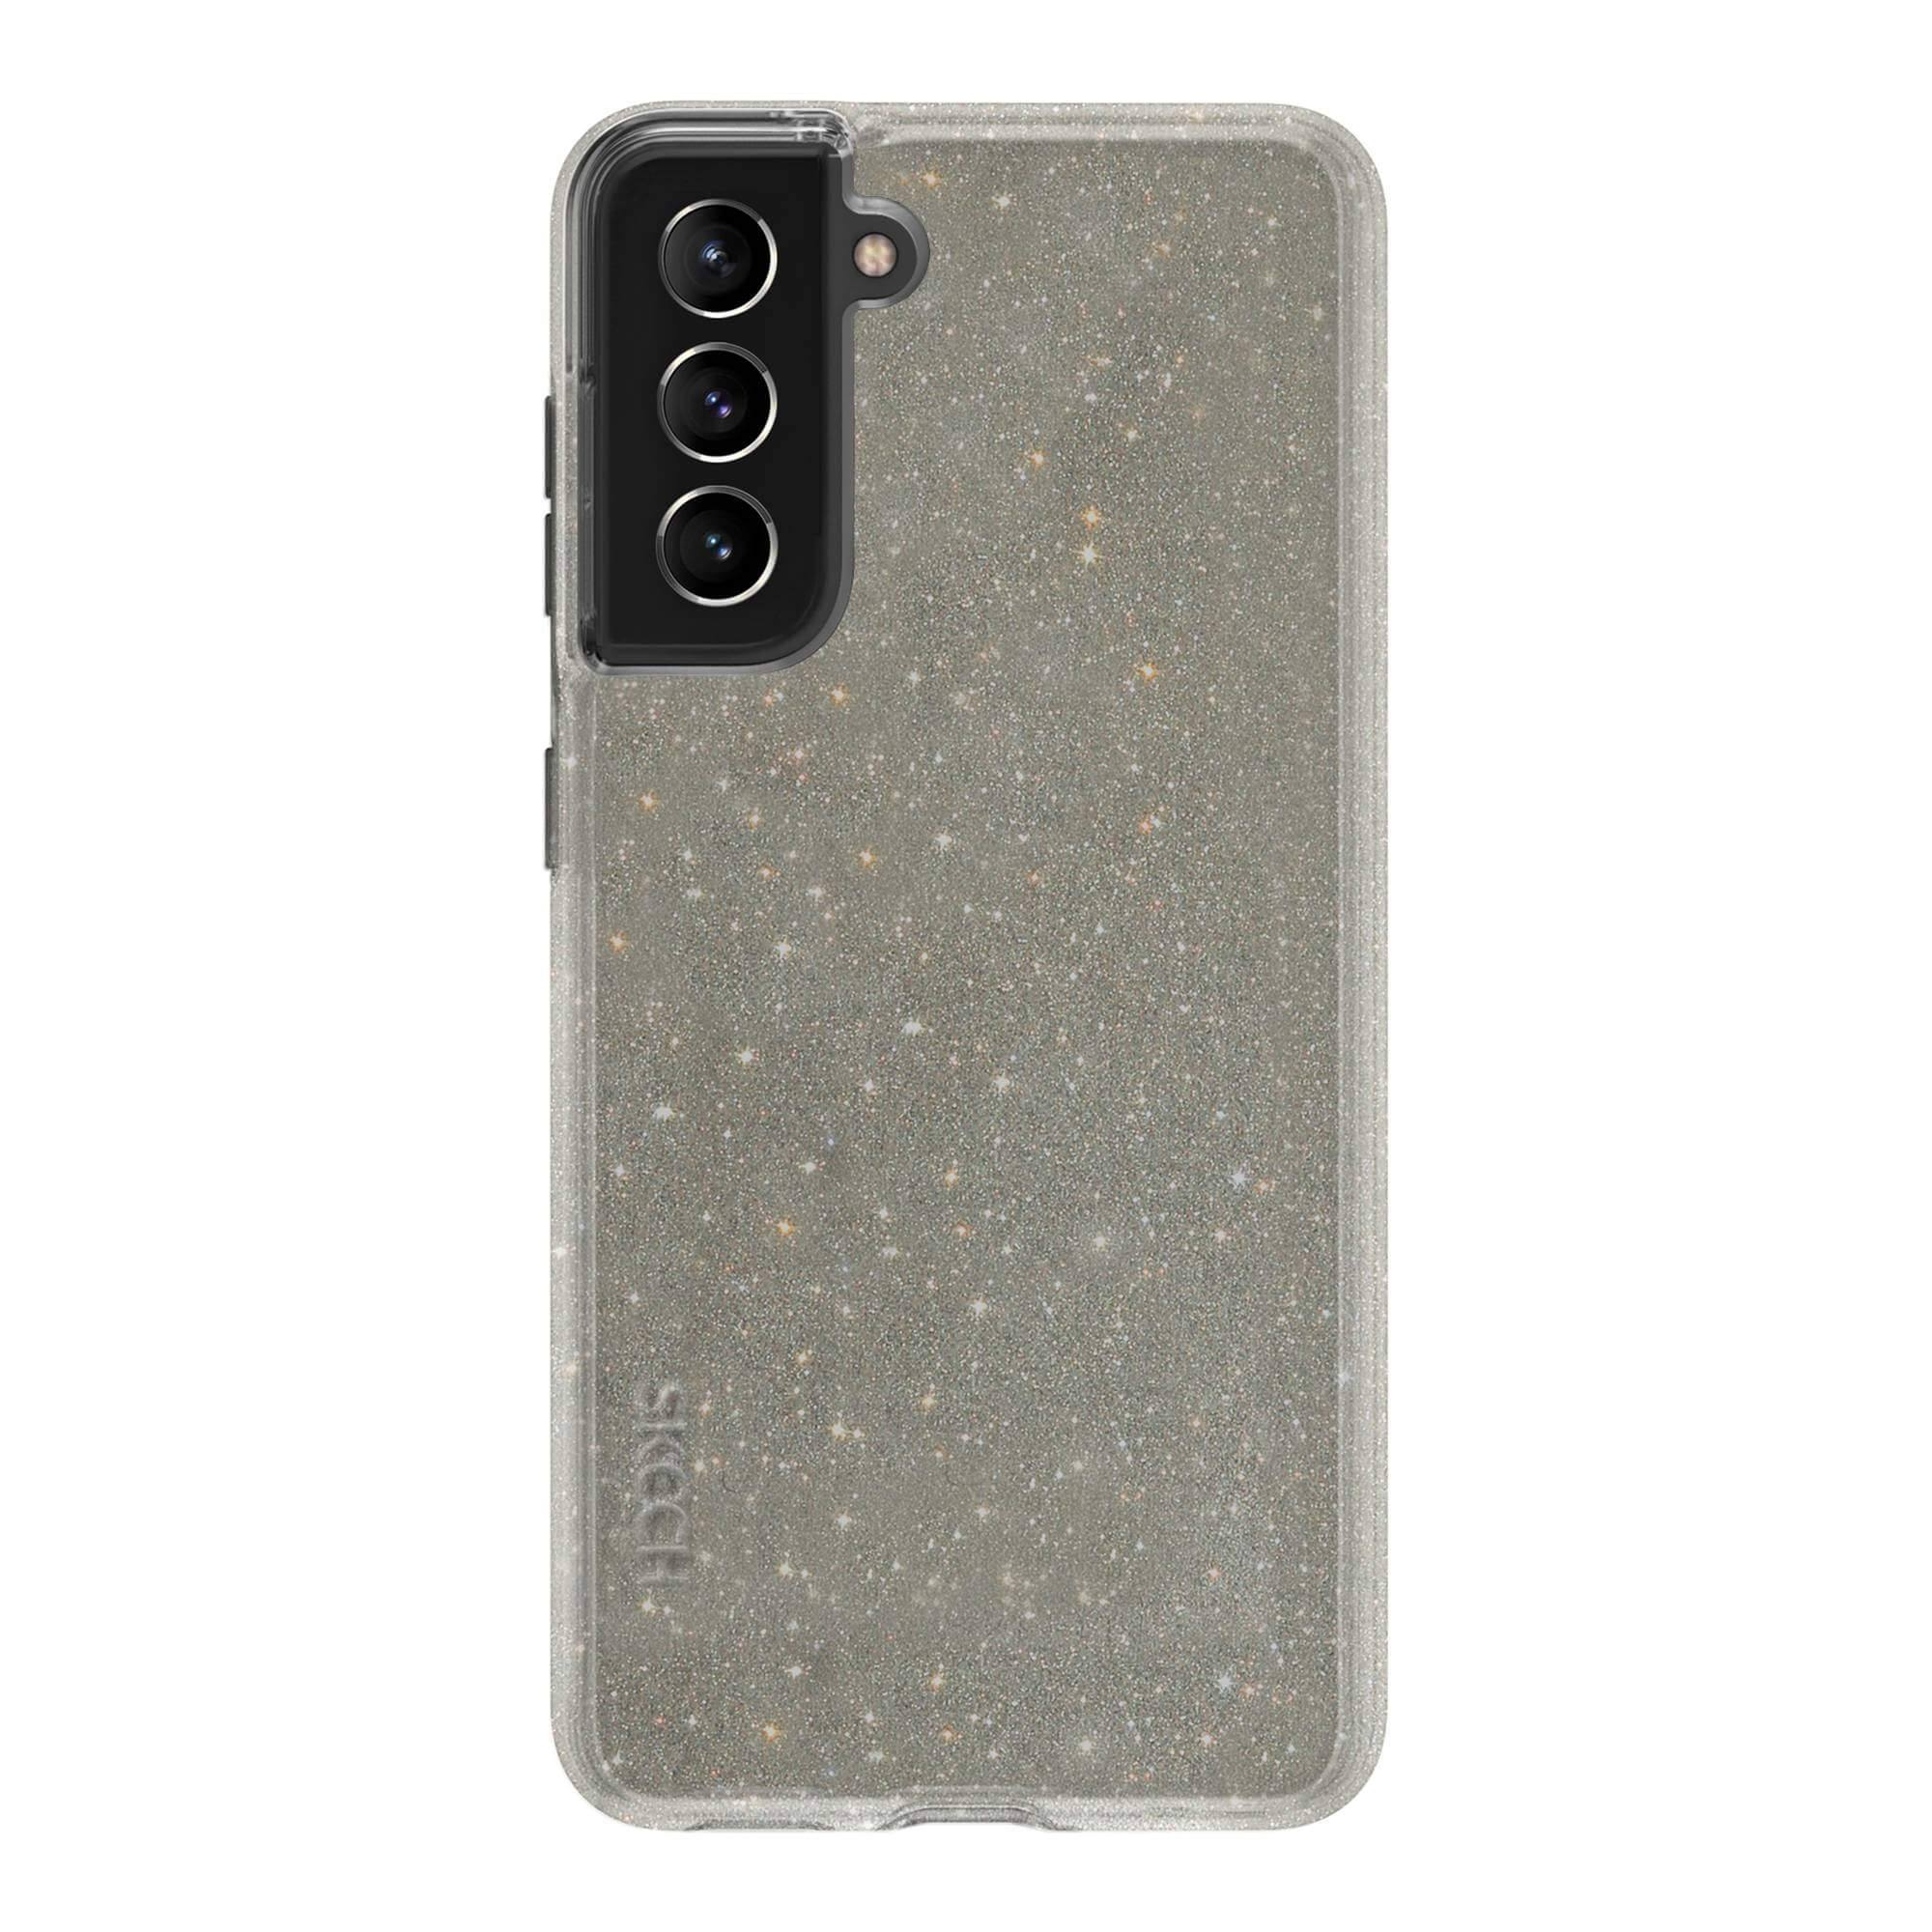 SKECH Backcover, Sparkle, Galaxy Samsung, 5G, snow transparent spark - S22+